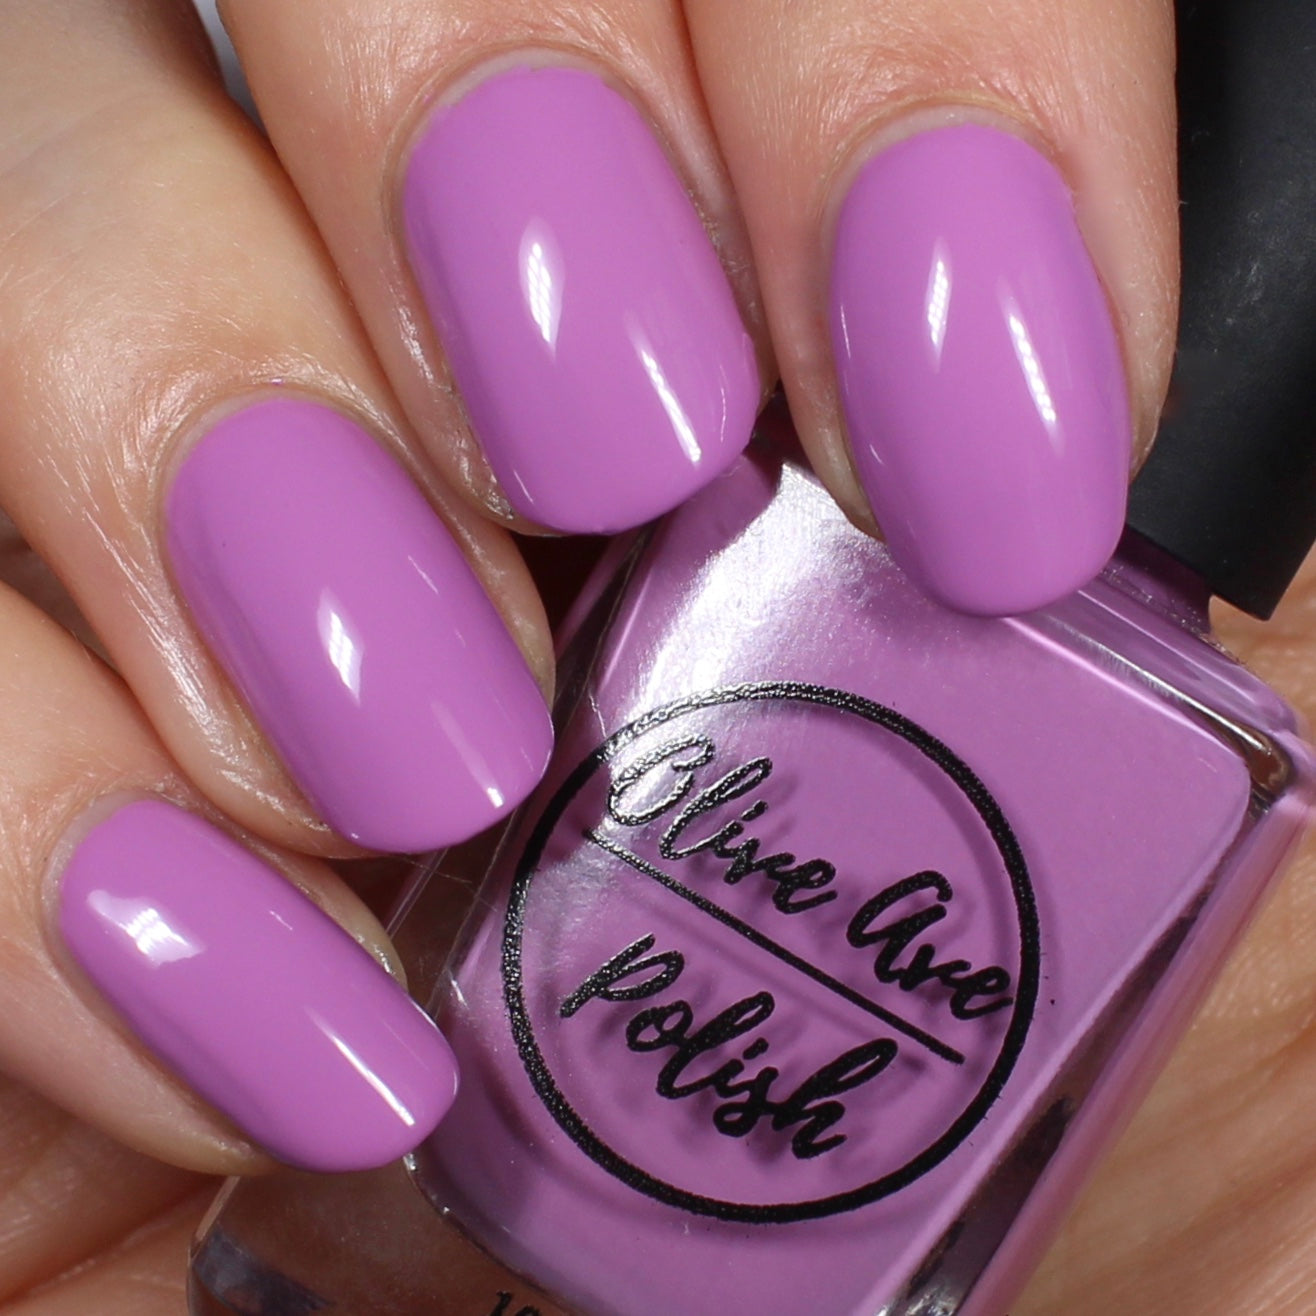 light purple nail polish swatch on pale skin tone